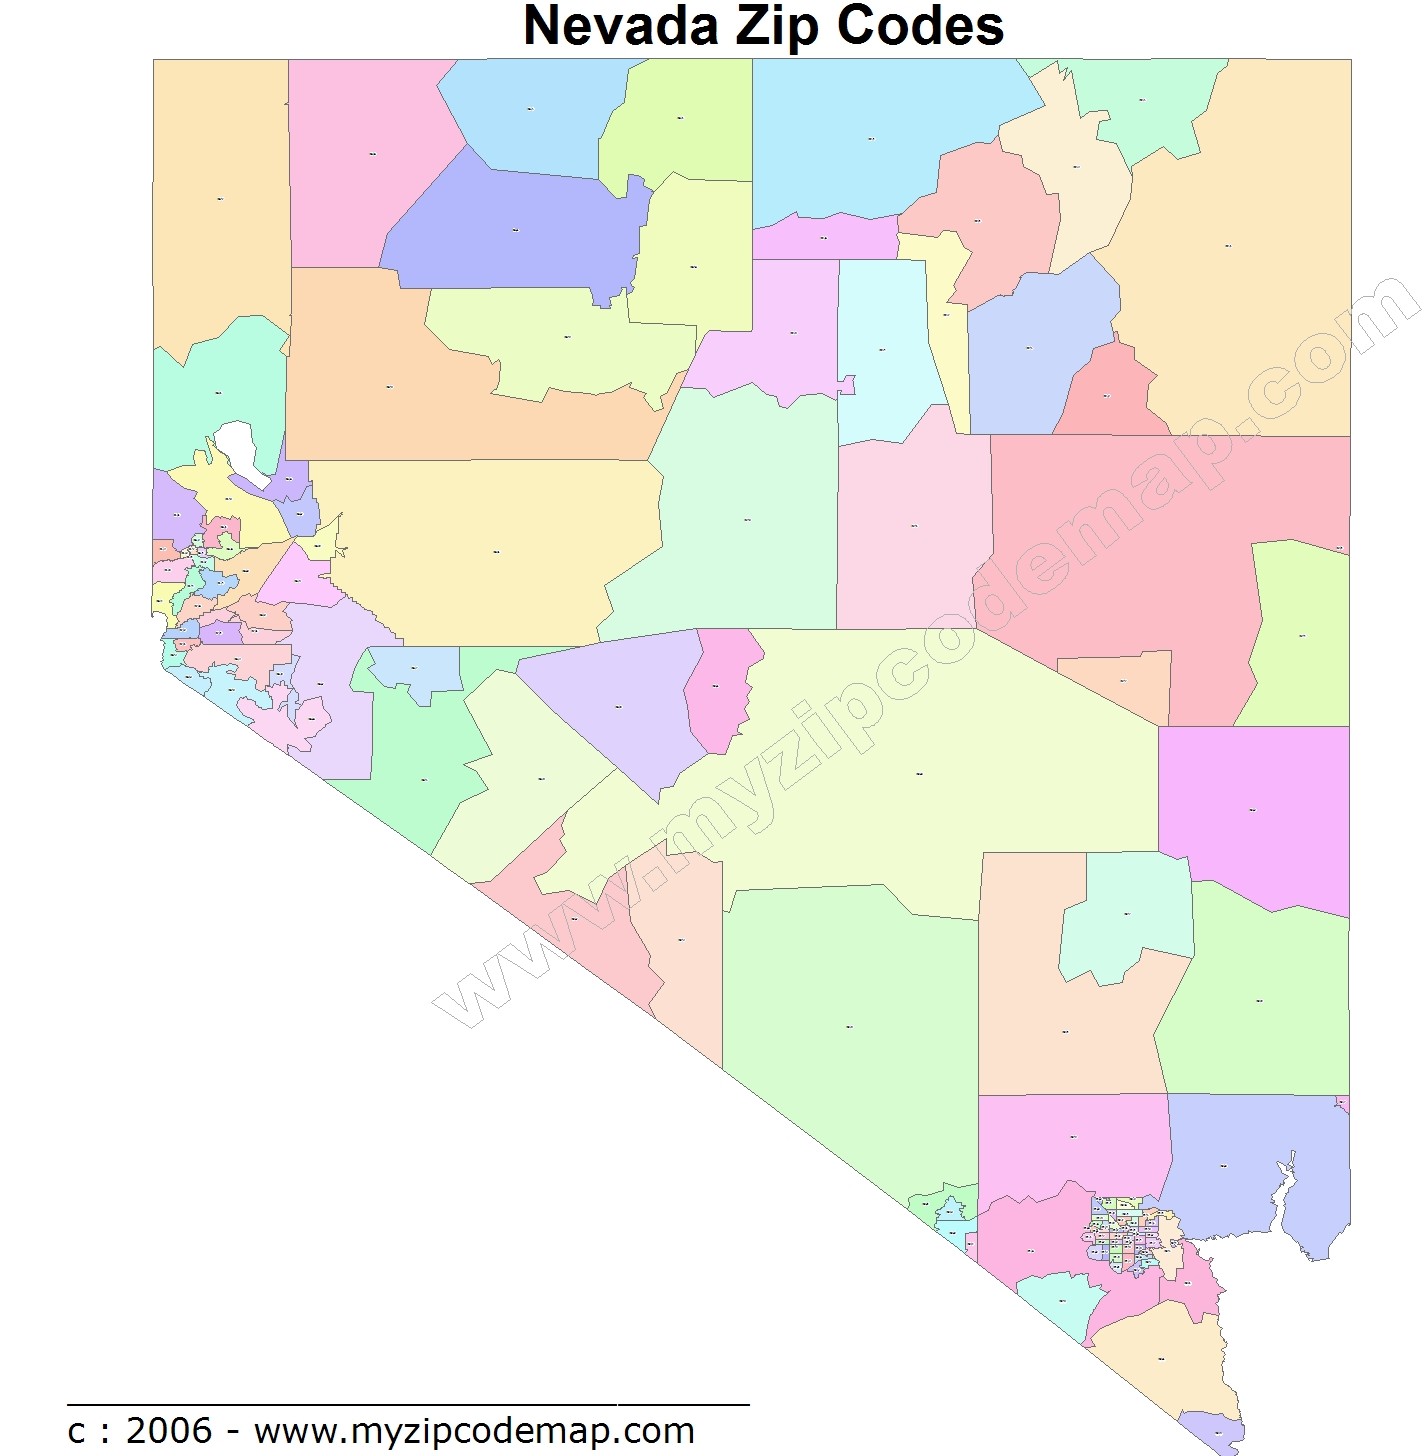 Nevada (NV) Zip Code Map